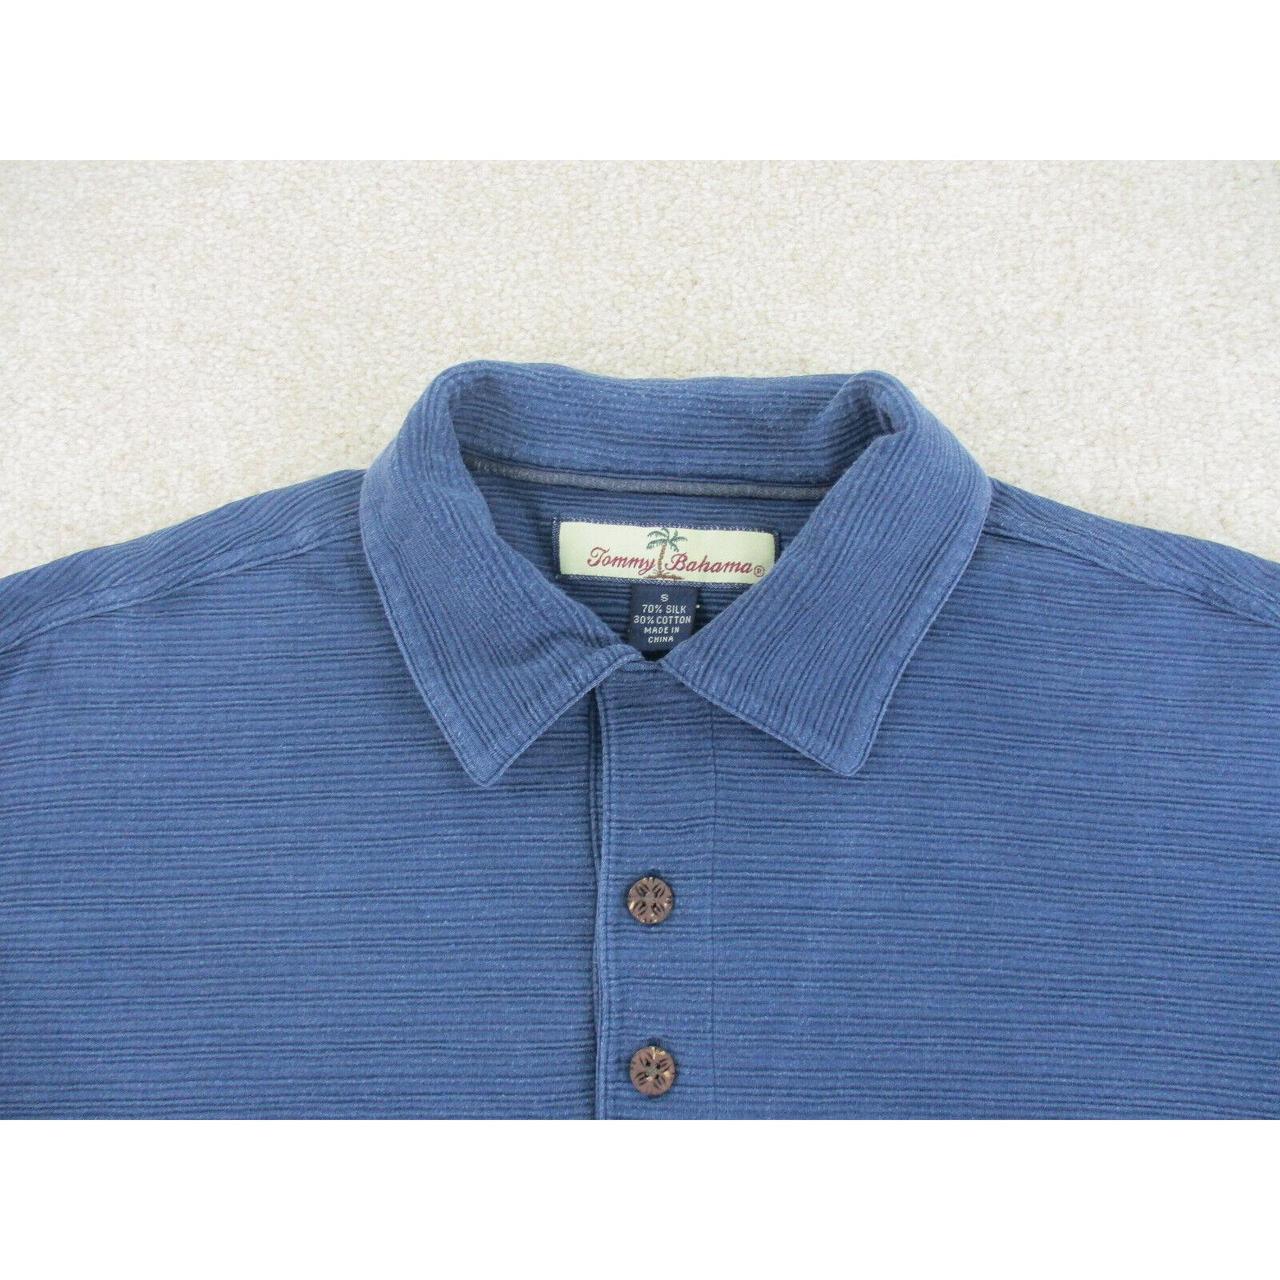 Product Image 3 - Tommy Bahama Polo Shirt Adult